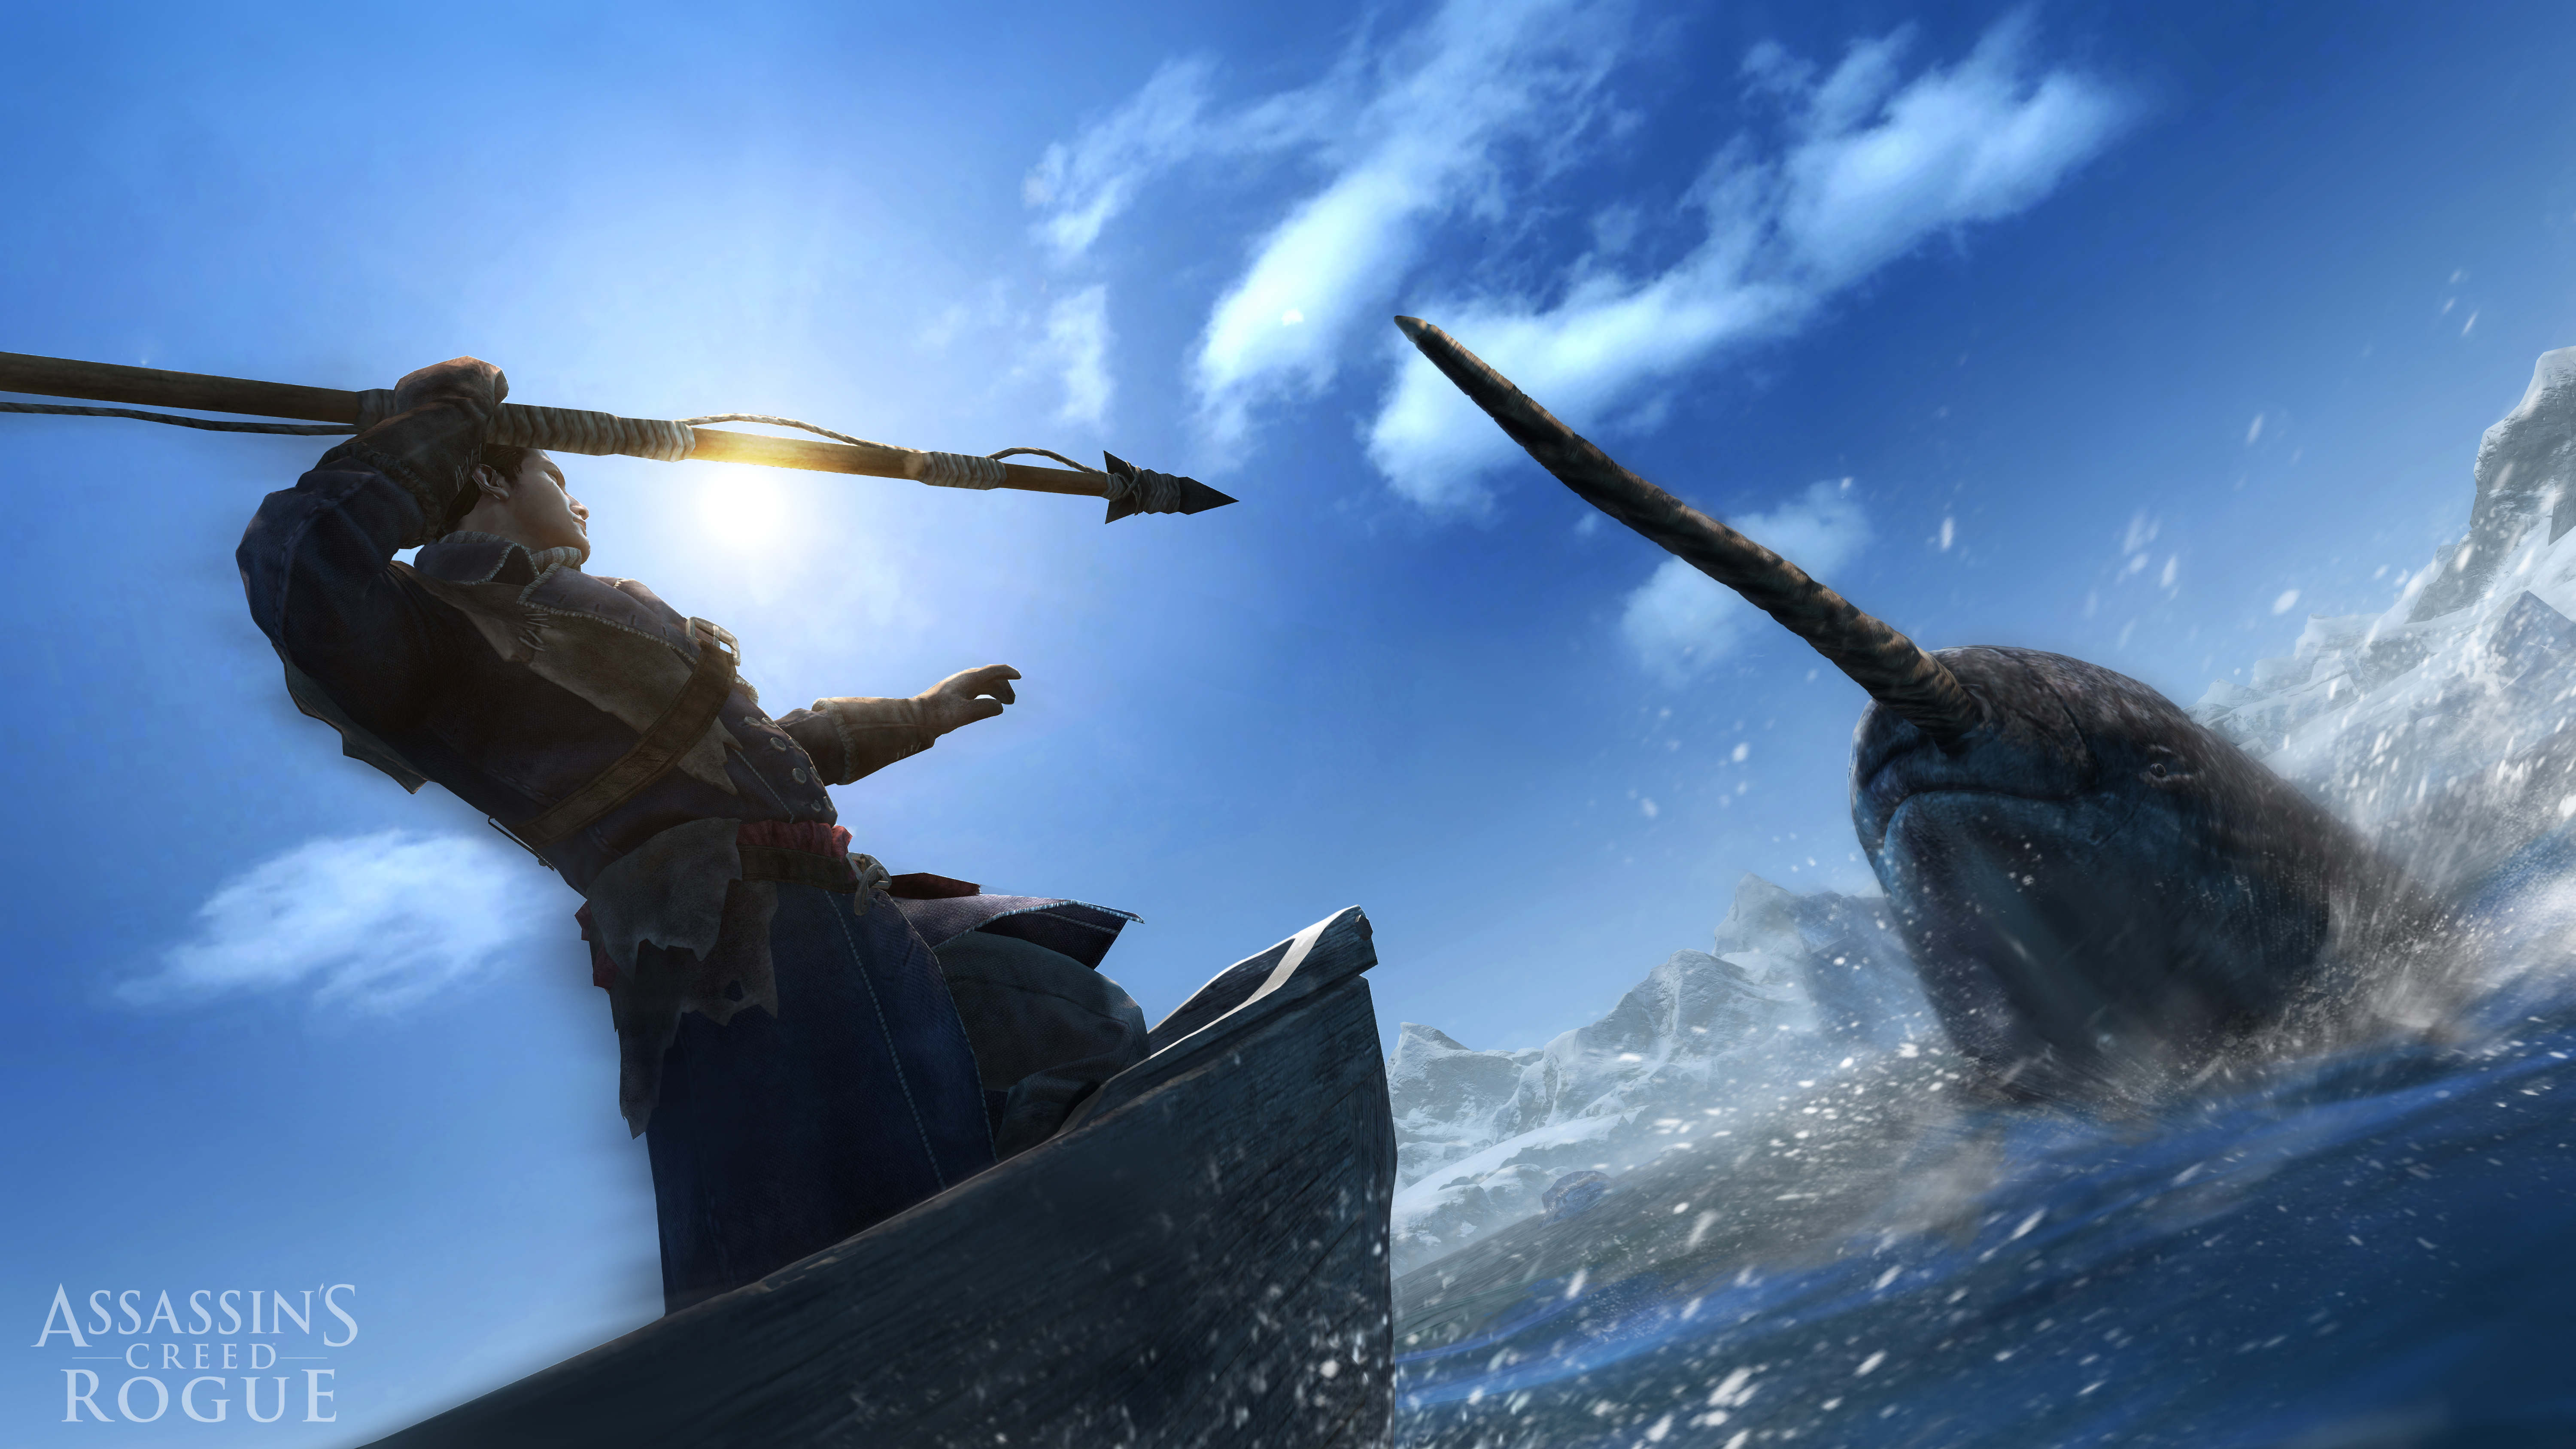 Assassin's Creed: Rogue - Harpooning